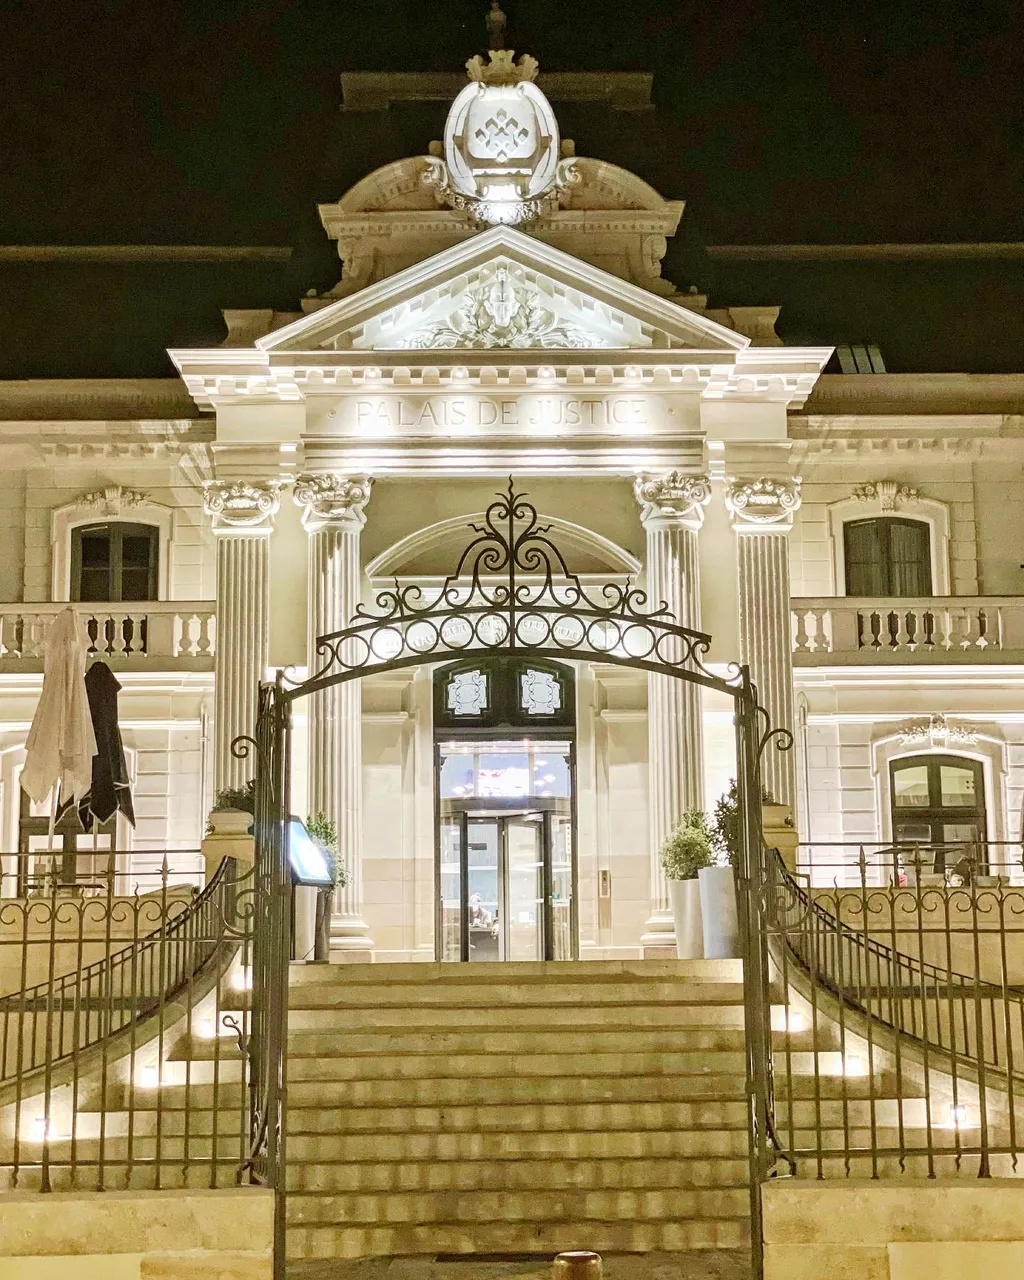 The Main Gate of the Palais de Justice (Court House)